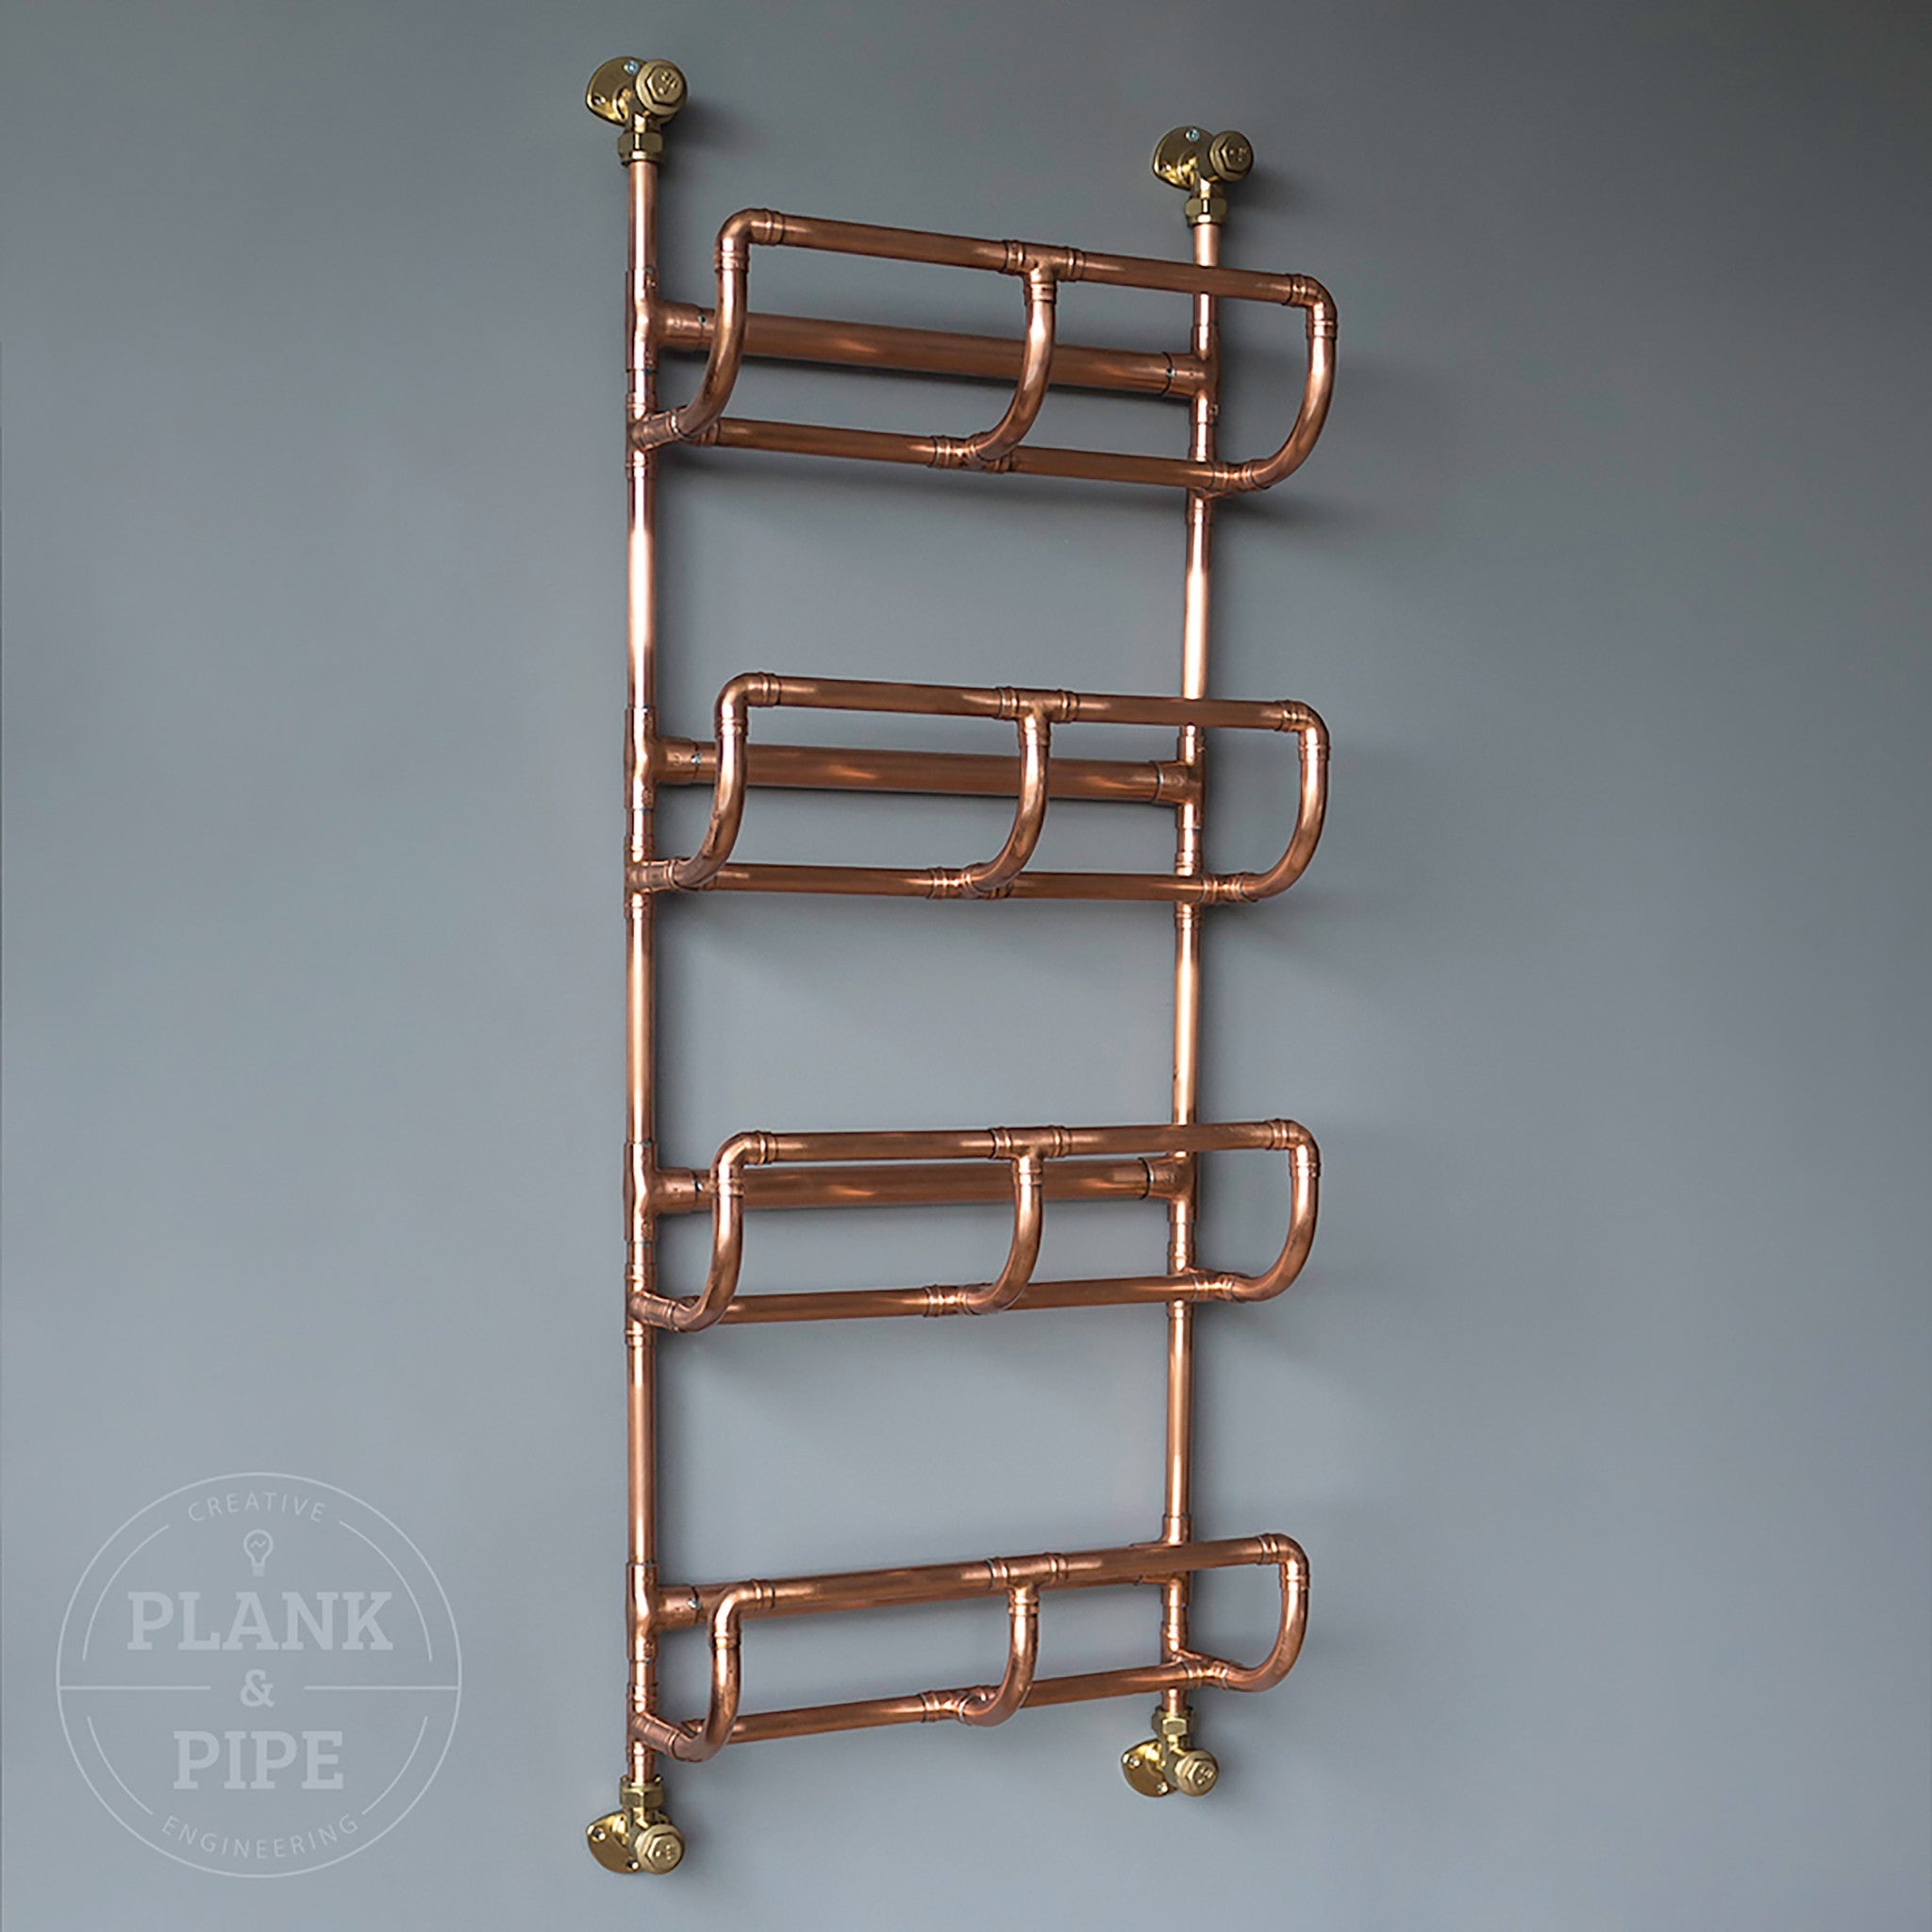 Copper towel rack with 4 tiers